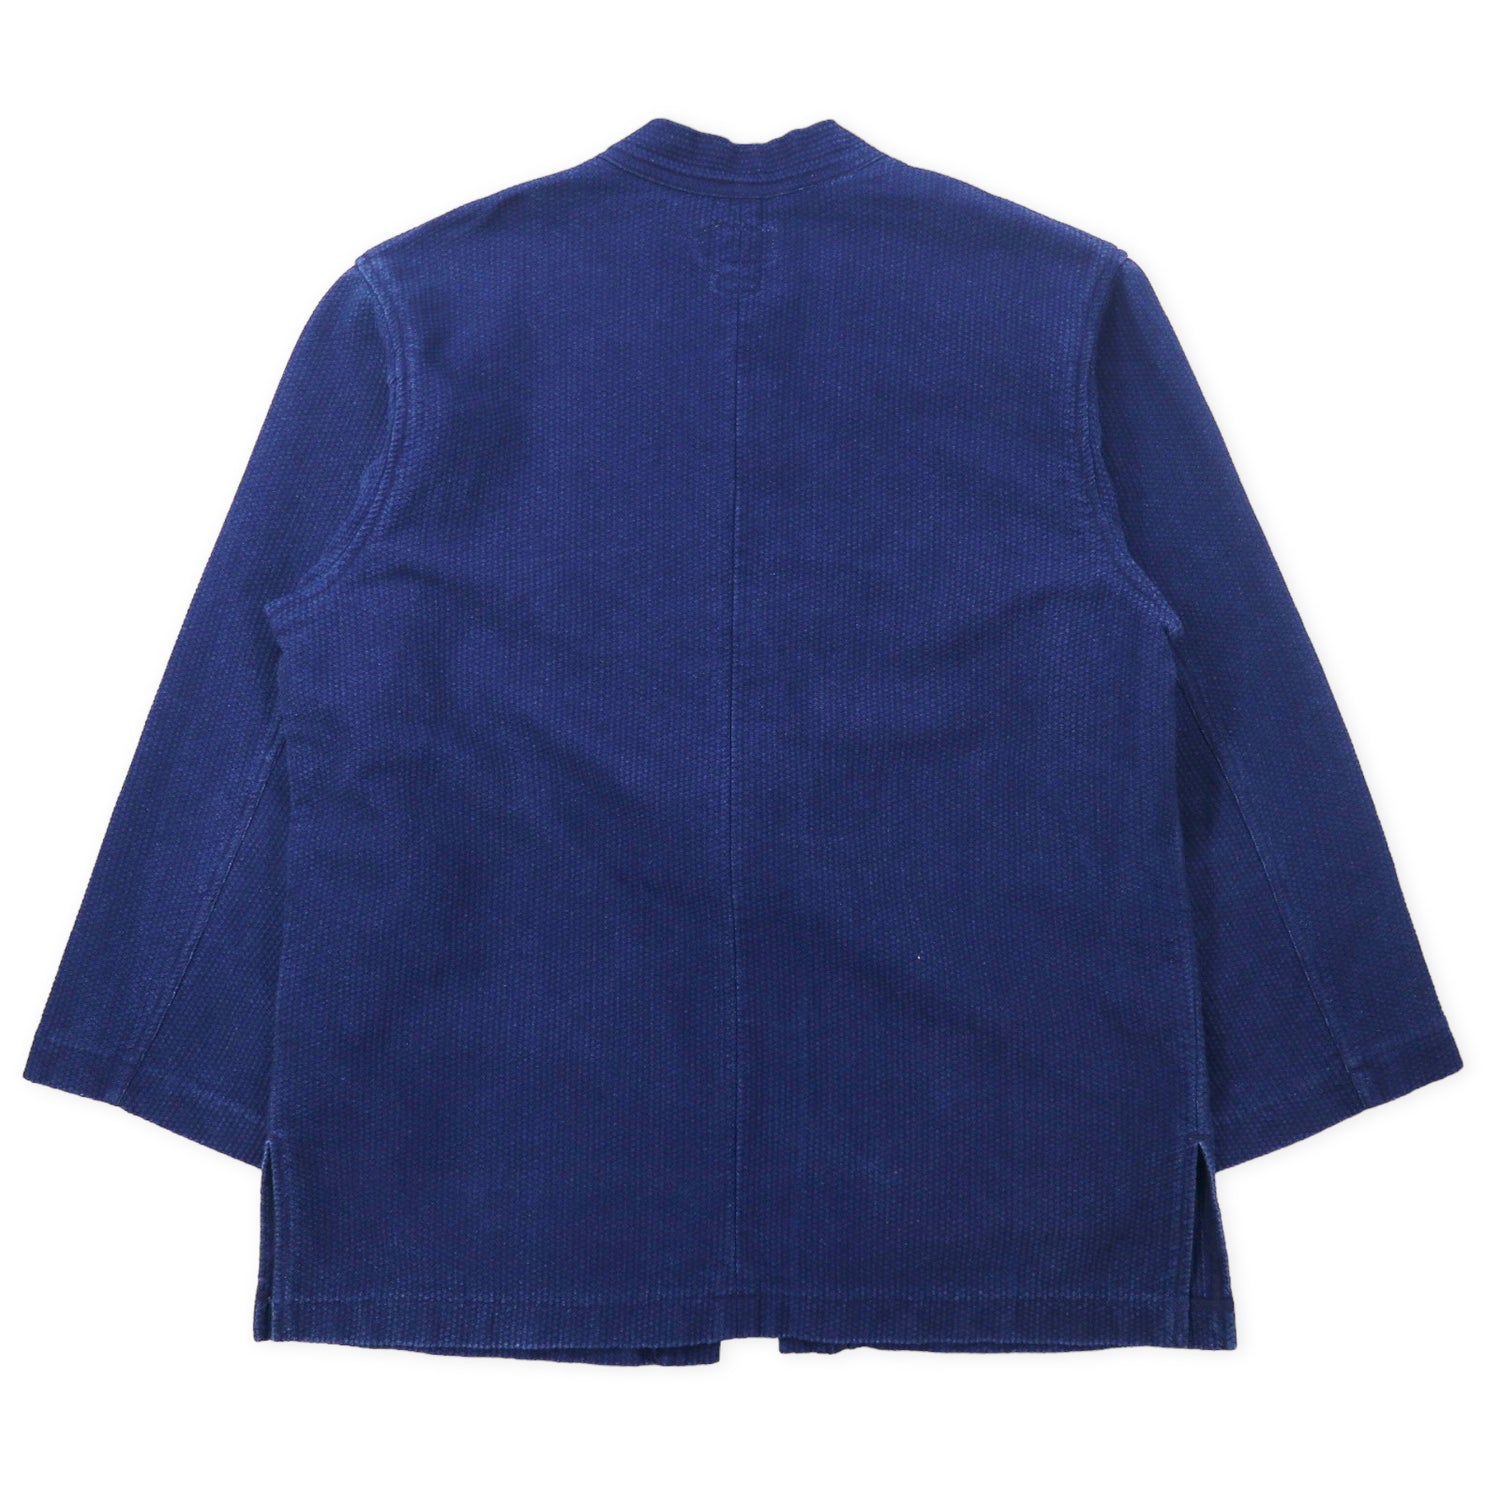 GAIJIN MADE Gown Jacket Haori Jacket XL Blue Cotton Indigo Dobby 